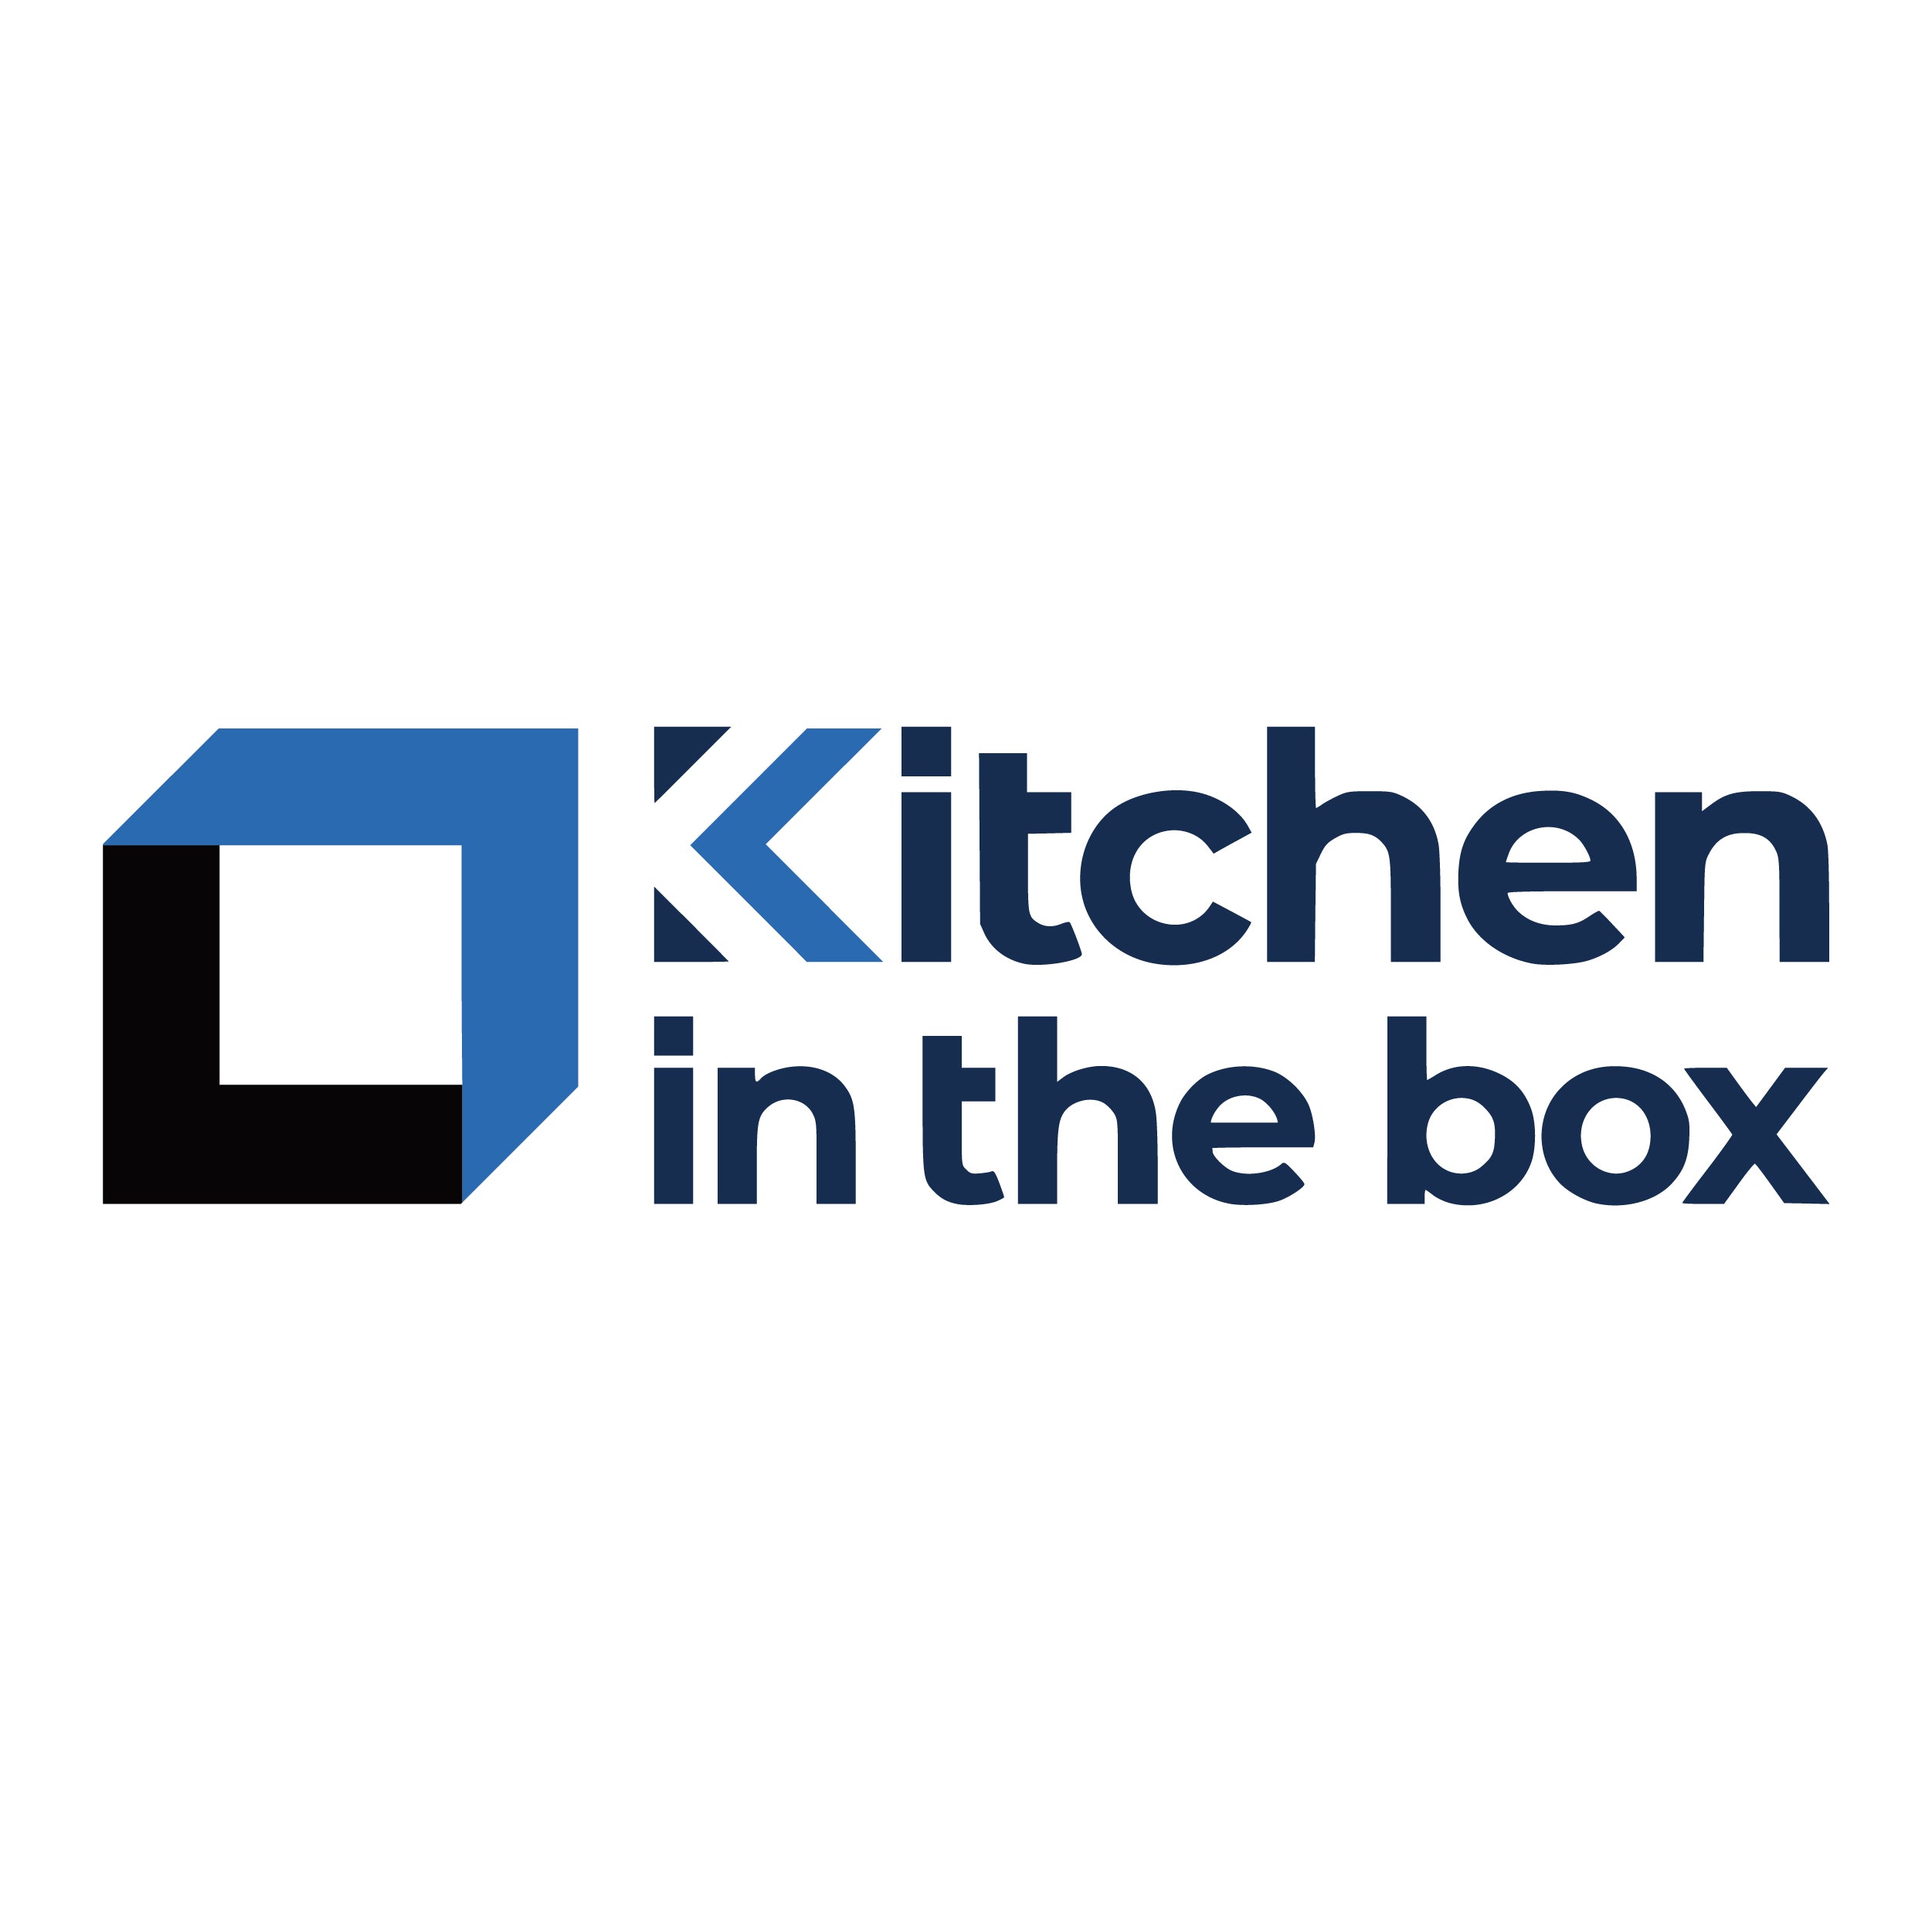 Mini 3.2 Quart Tilt-Head Stand Mixer Kitchen in th box – Kitchen in the box